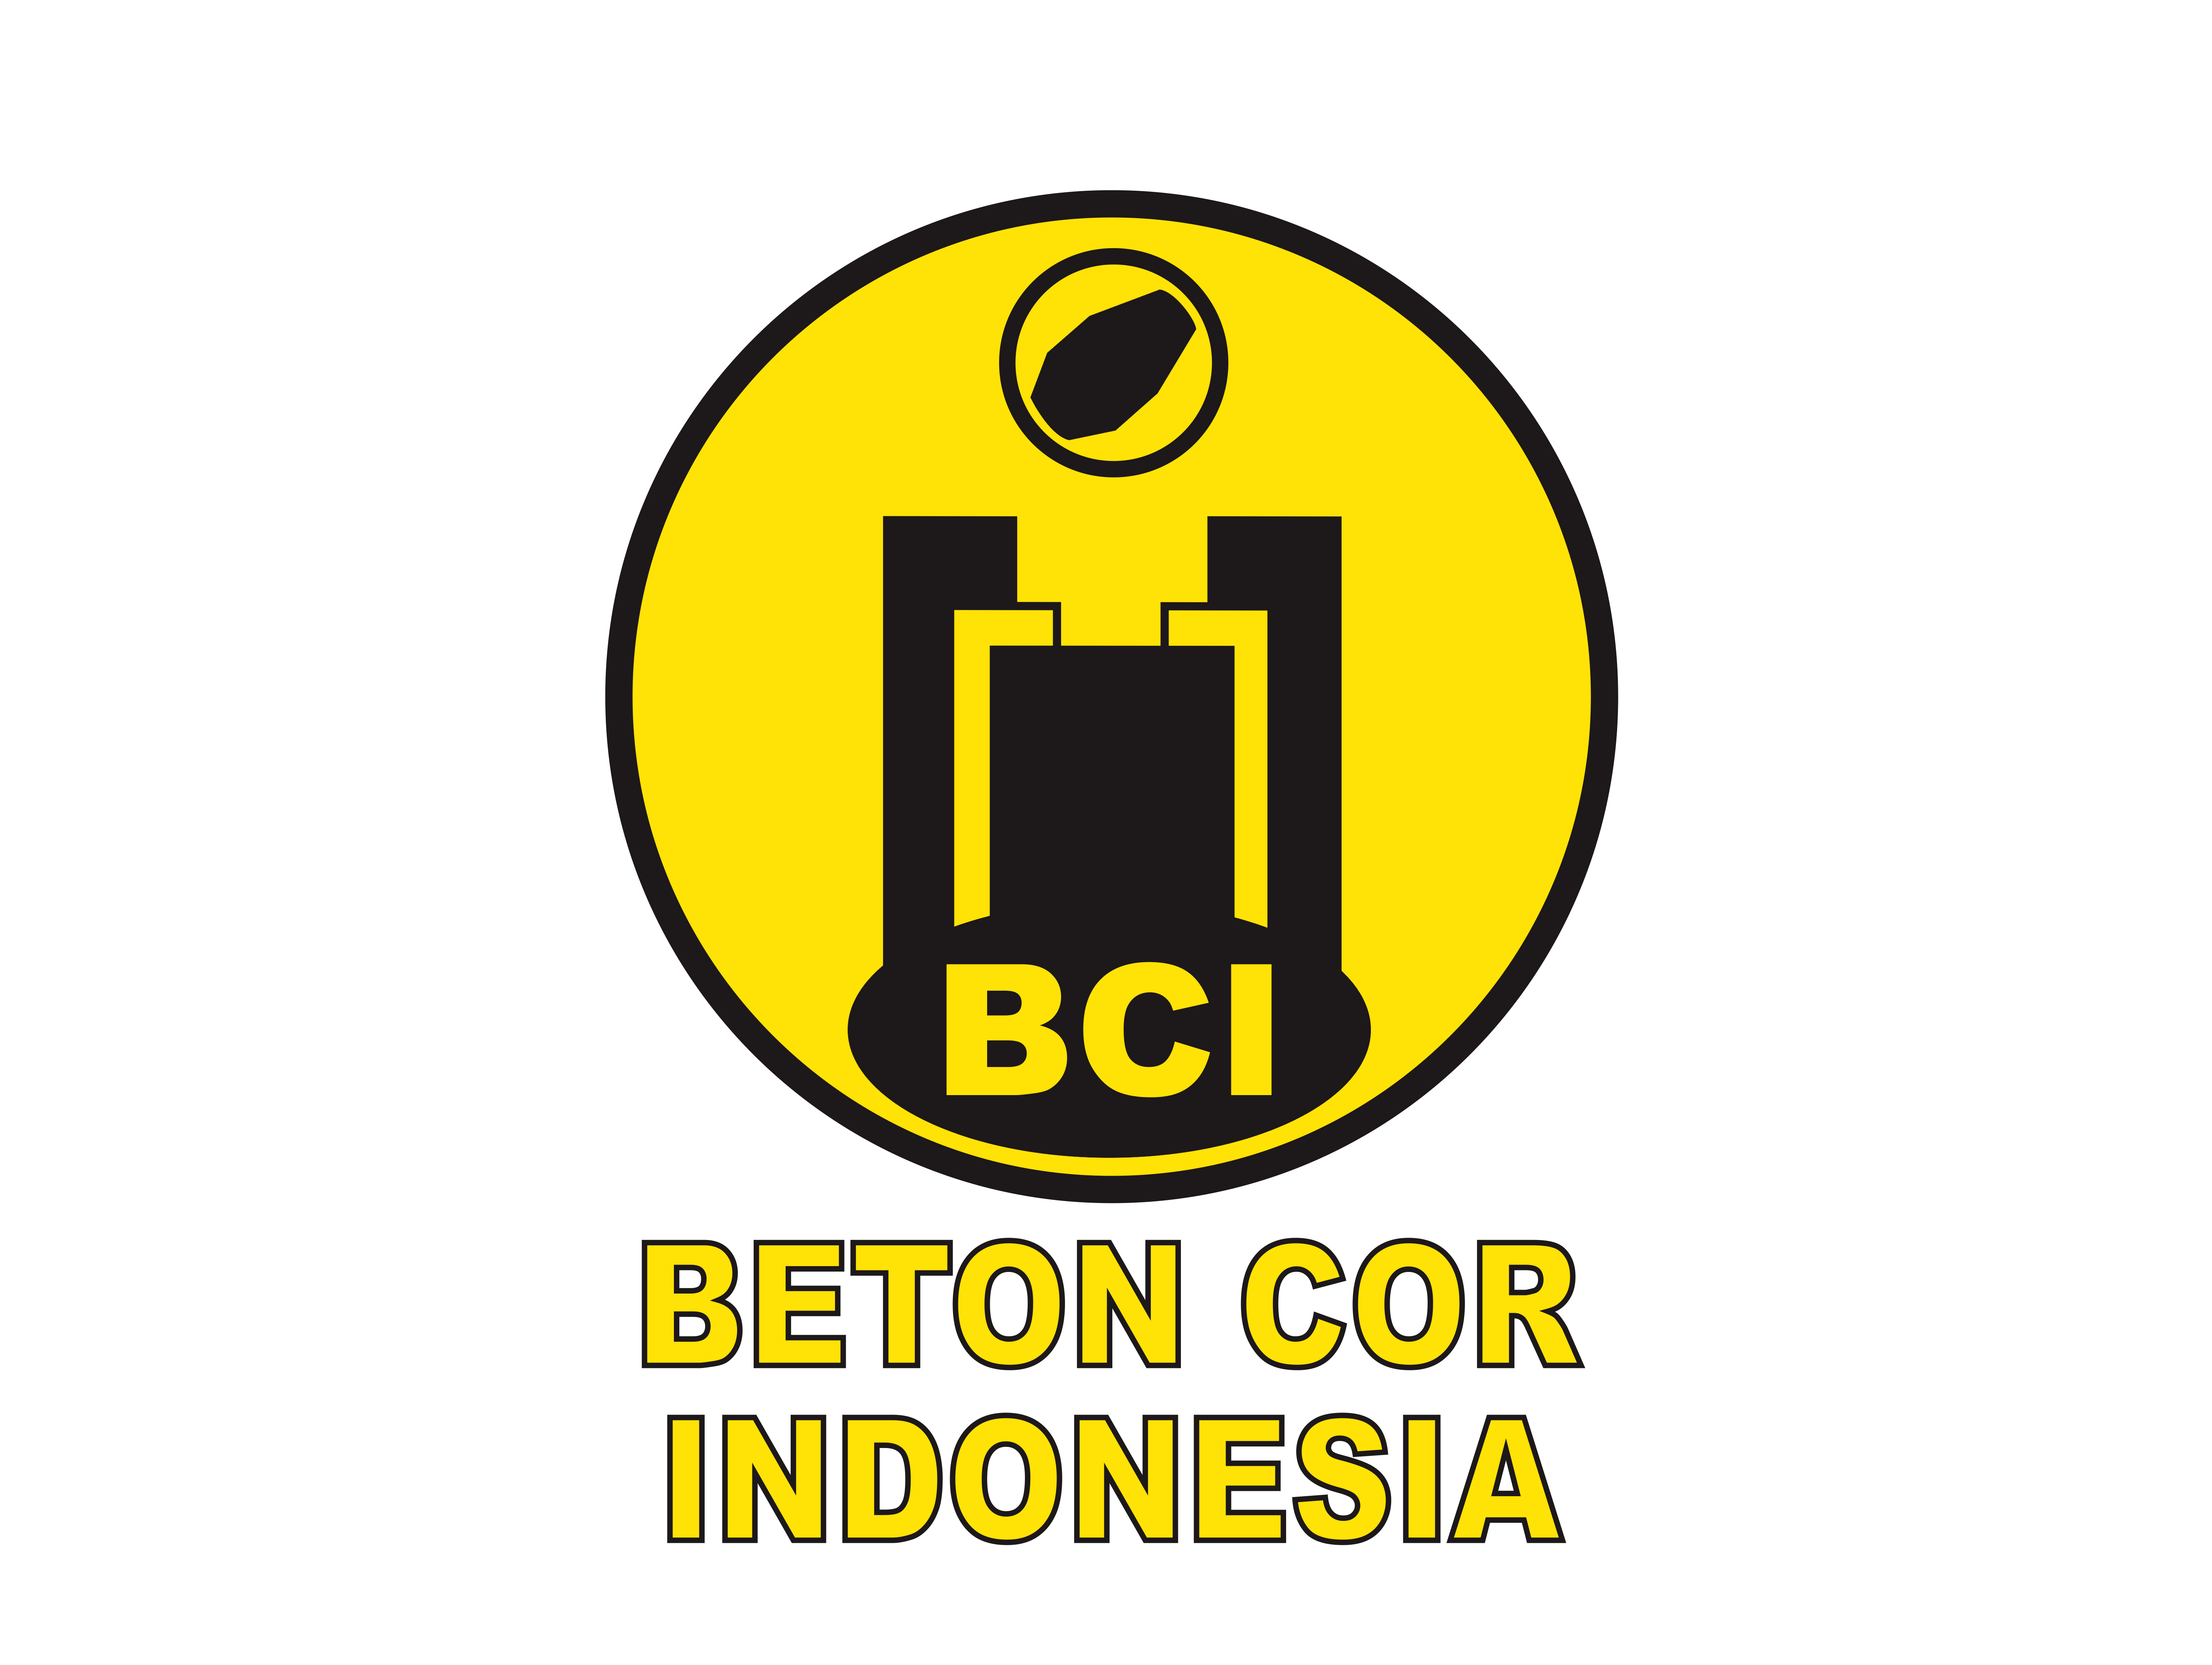 BETON COR INDONESIA